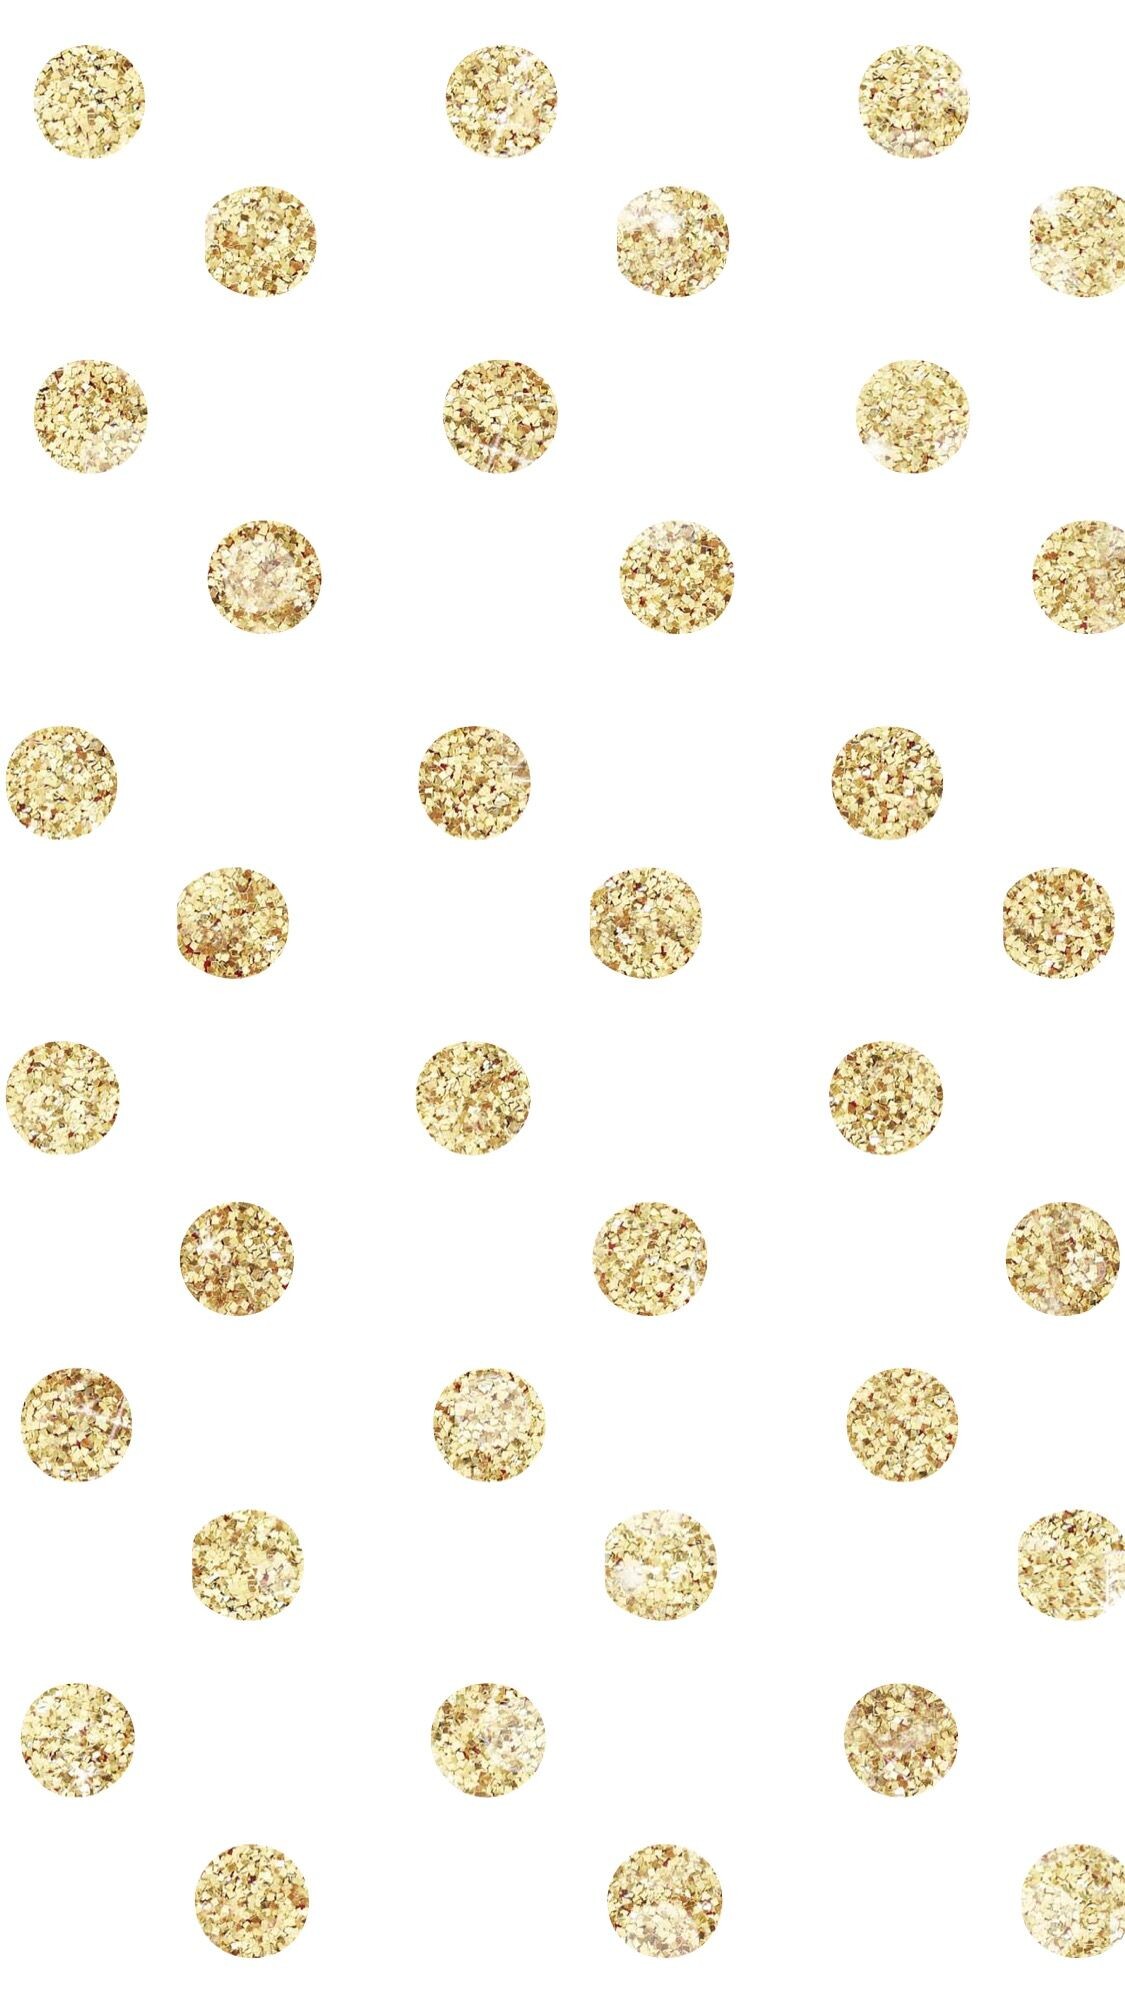 Gold Polka Dot: Glitter dots, Shining confetti made of shimmer metallic powder. 1130x2010 HD Background.